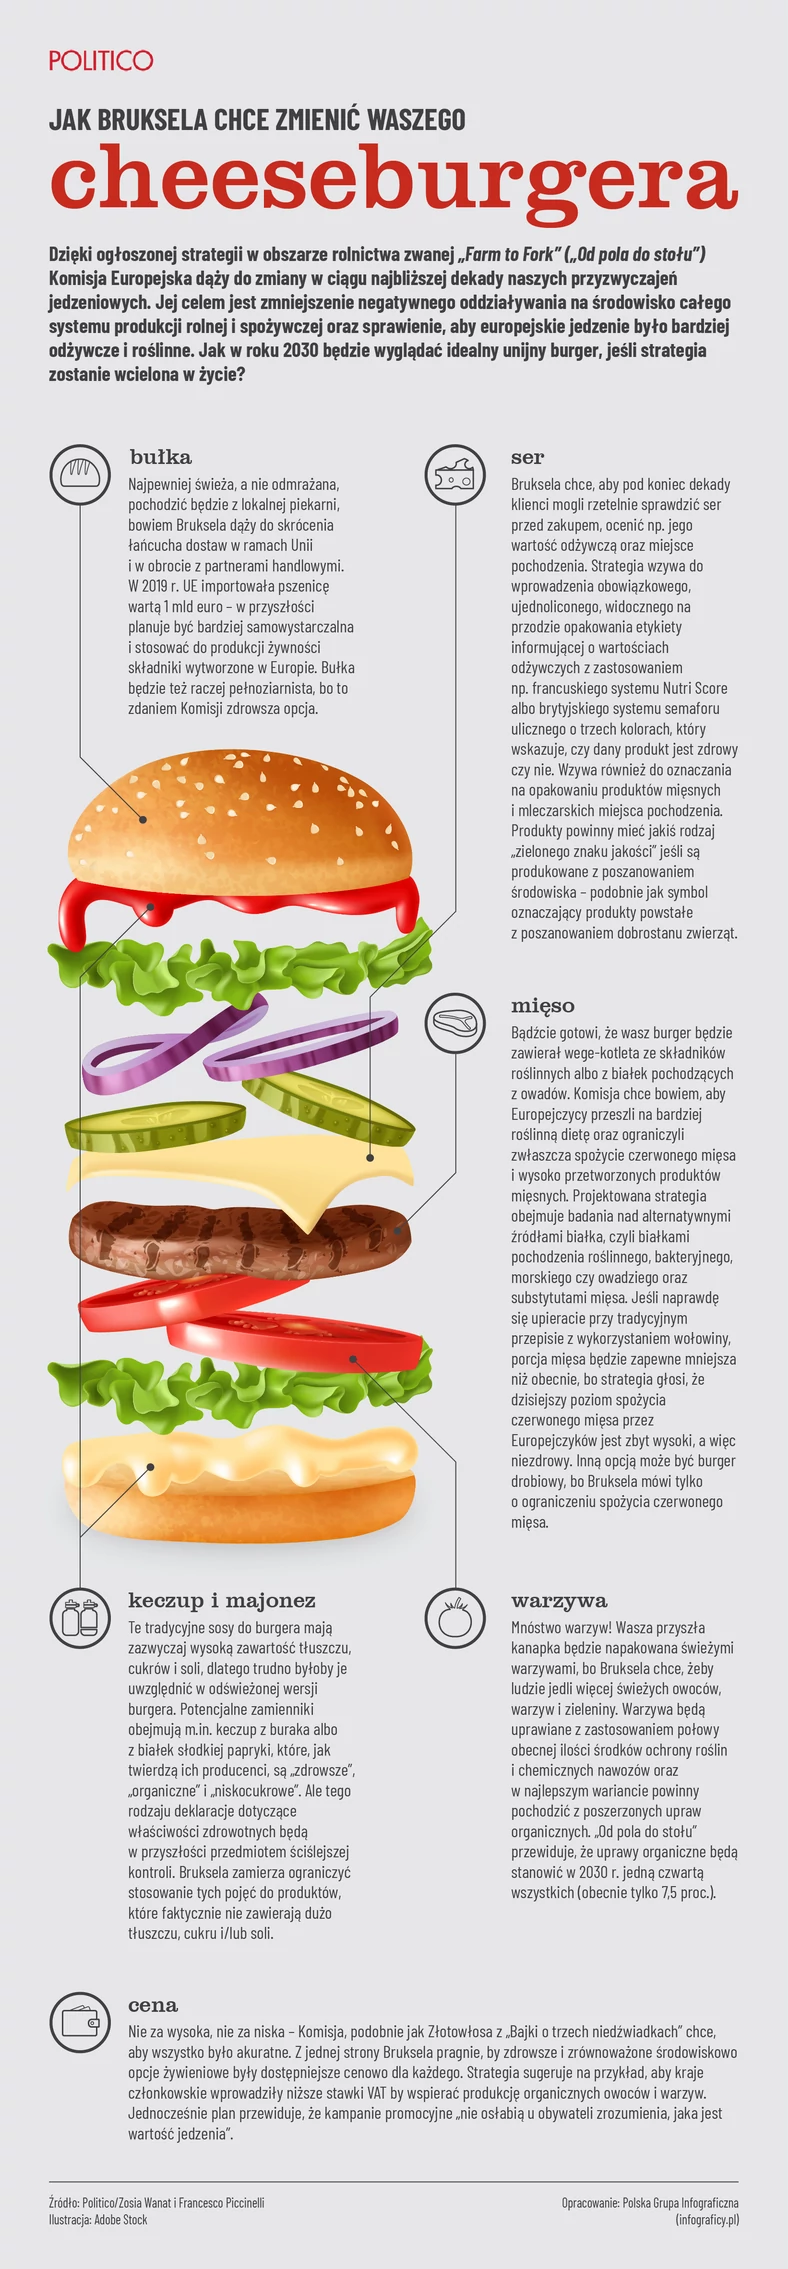 Jak UE chce zmienić cheesburgera